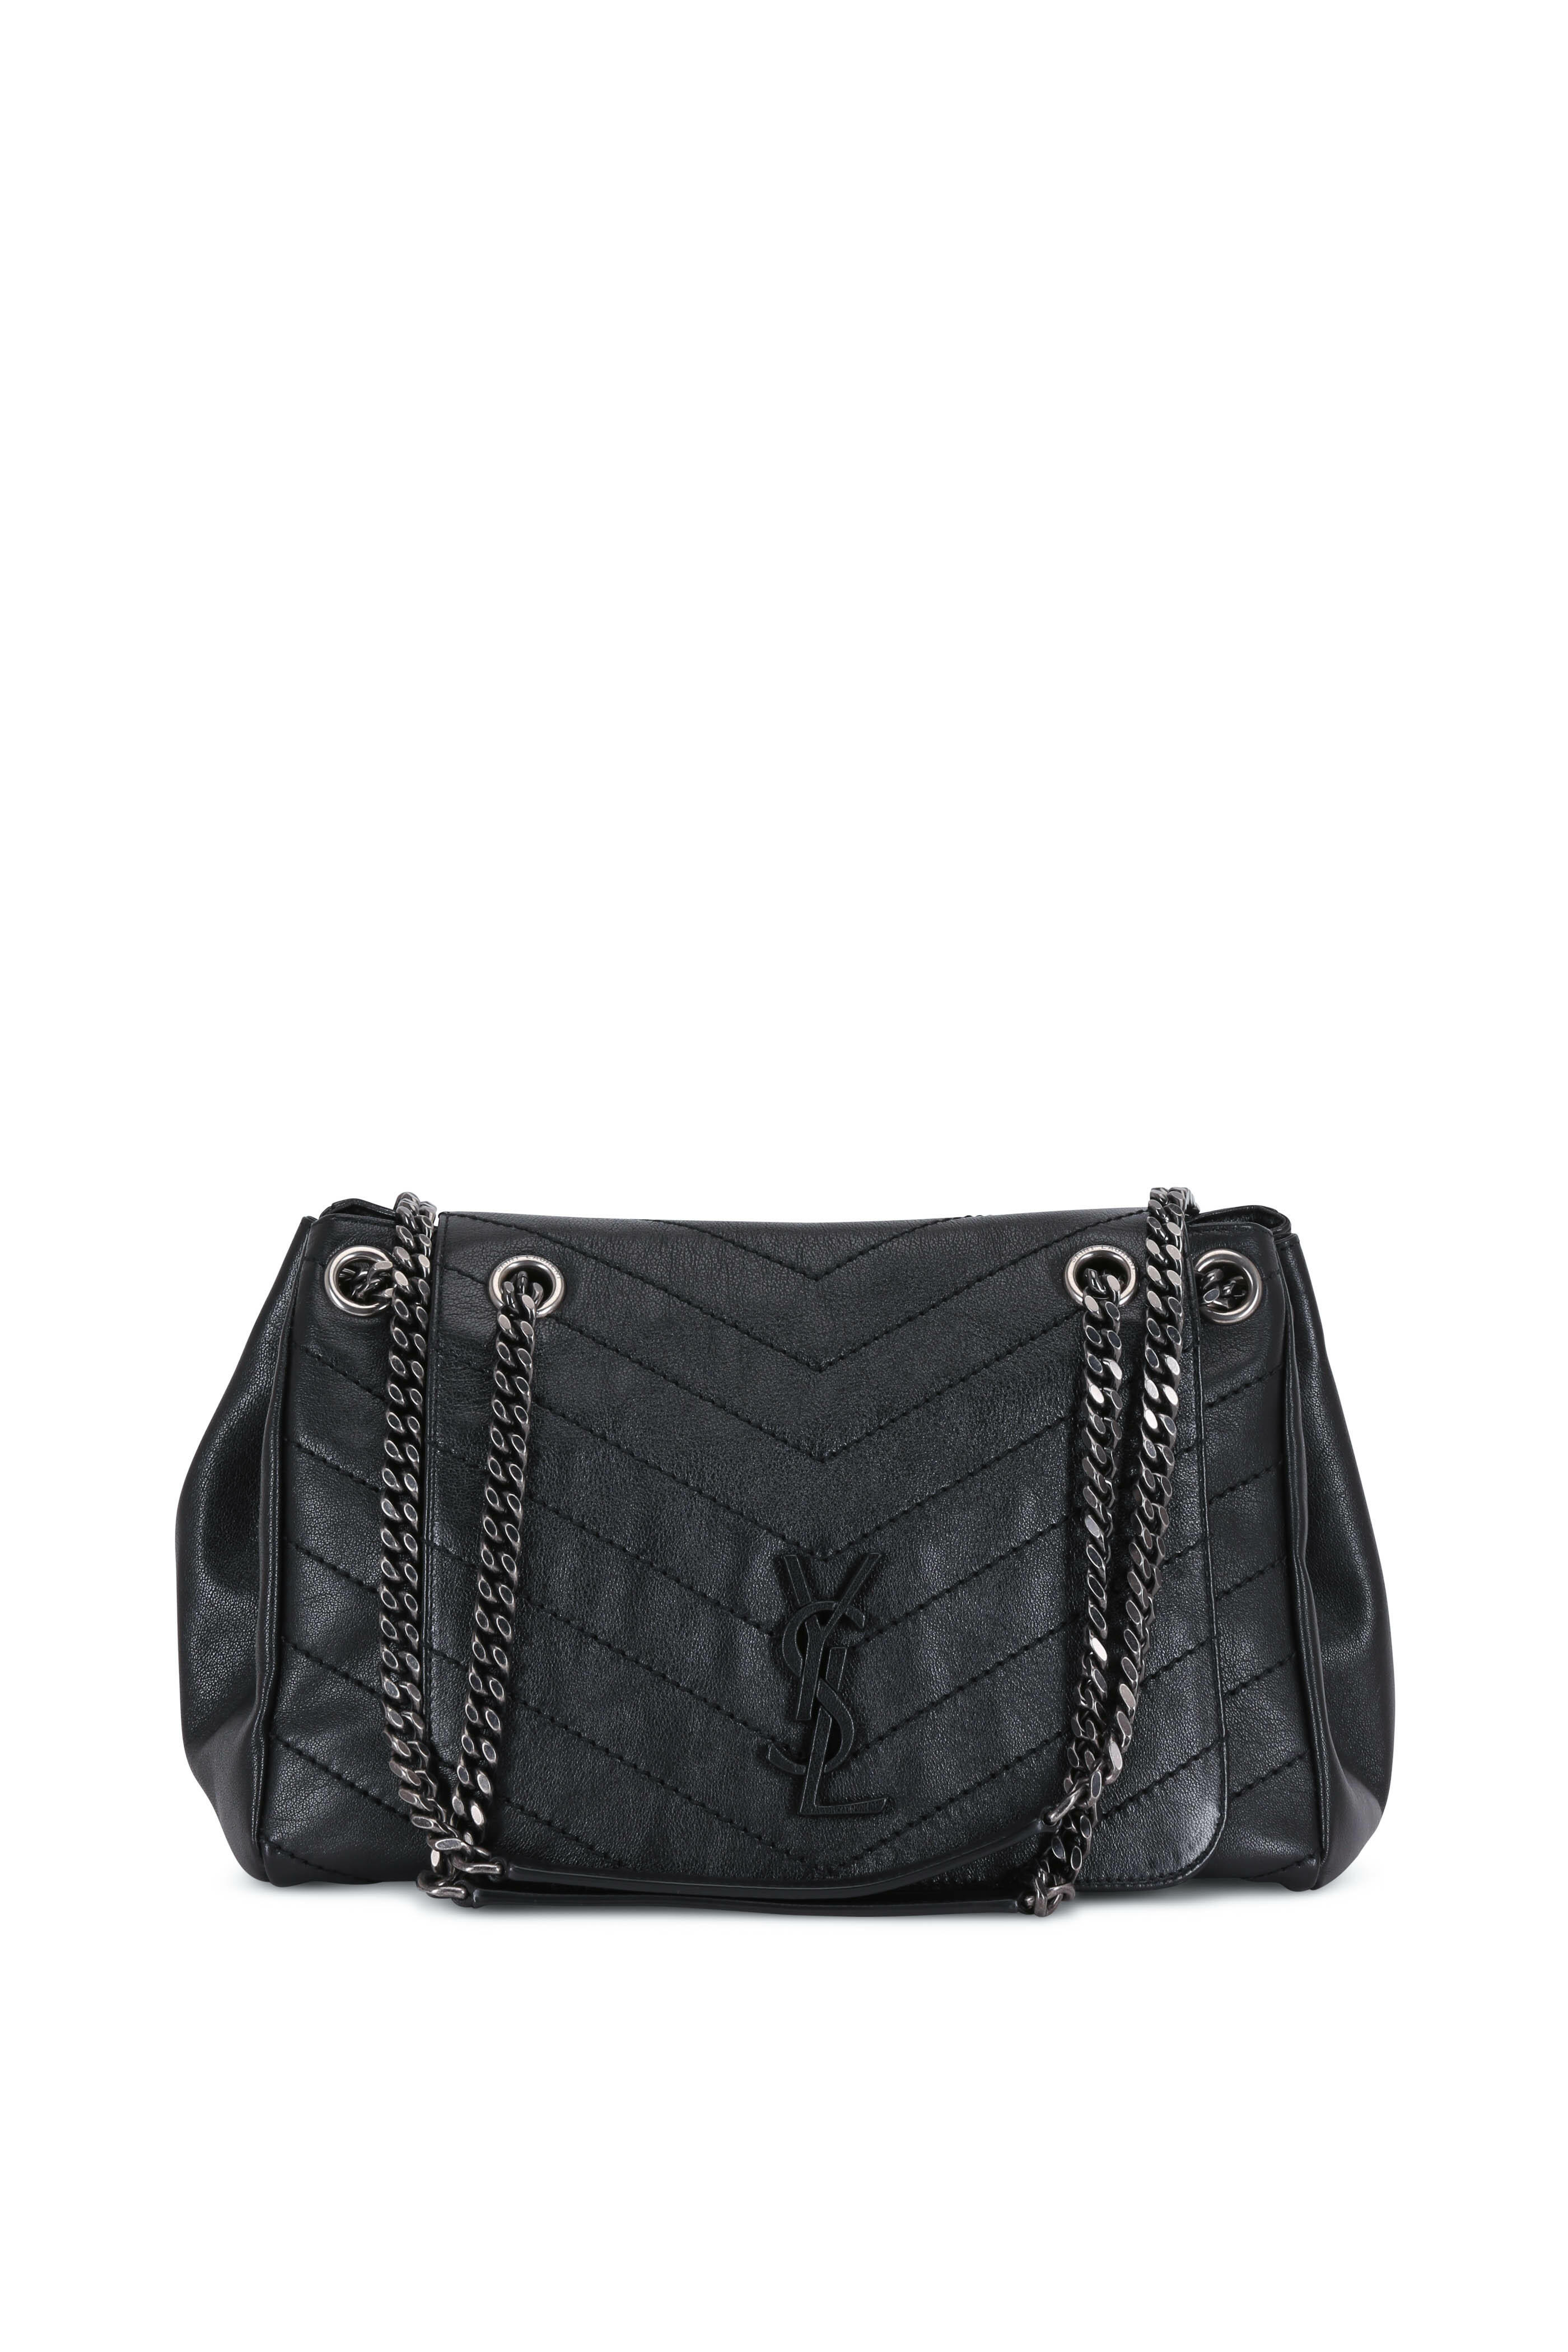 Saint Laurent Monogram Nolita Shoulder Bag - Black Shoulder Bags, Handbags  - SNT288465